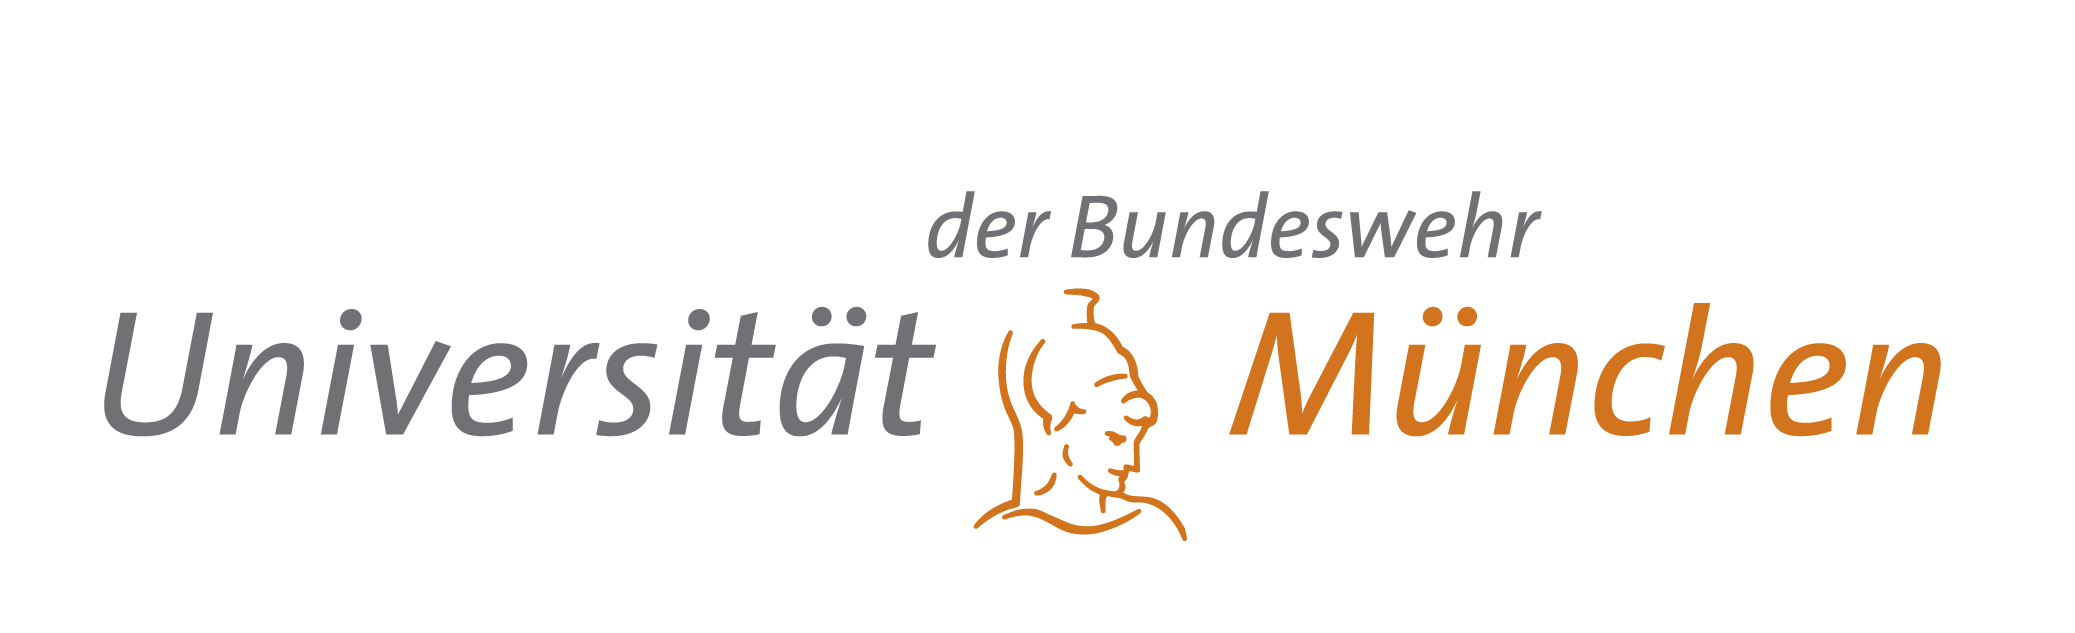 UniBW_Muenchen_Logo-01.png